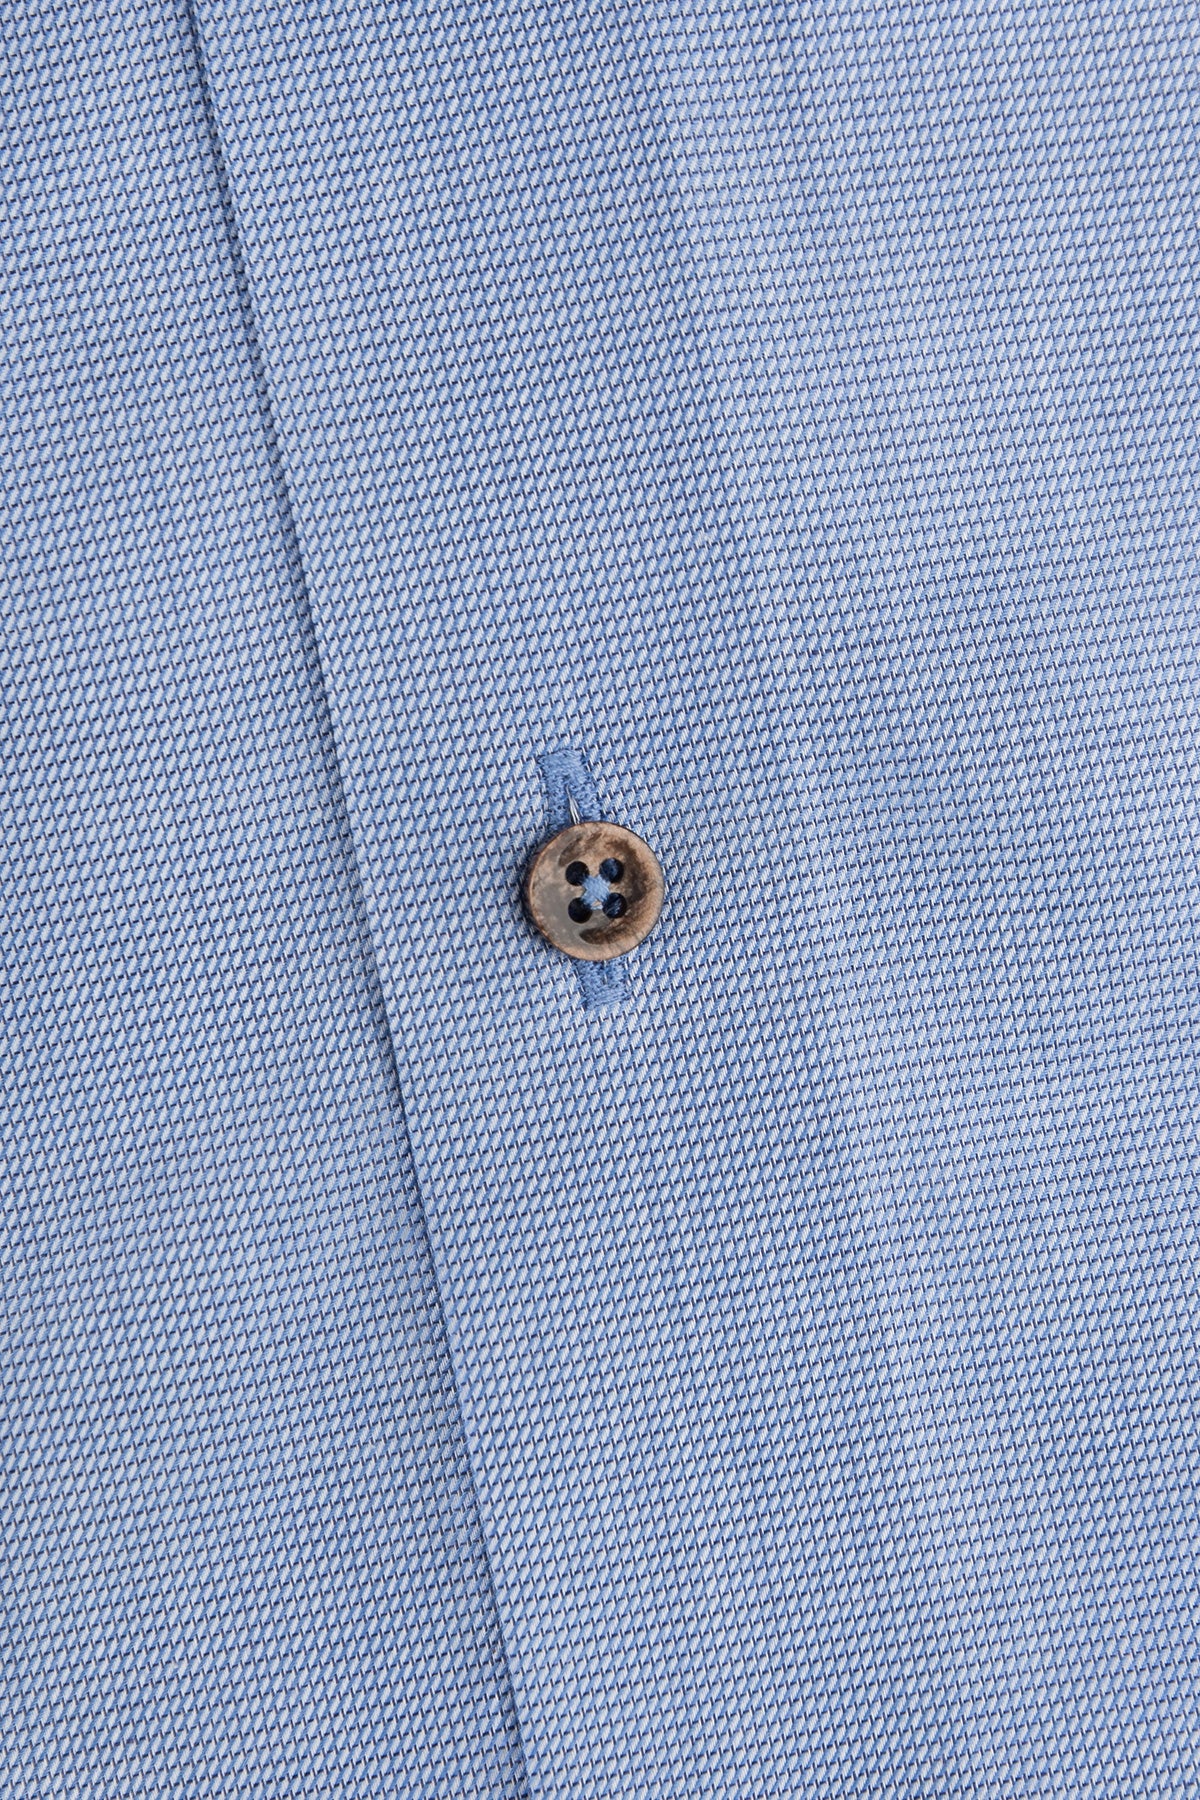 Blue slim fit shirt with contrast details